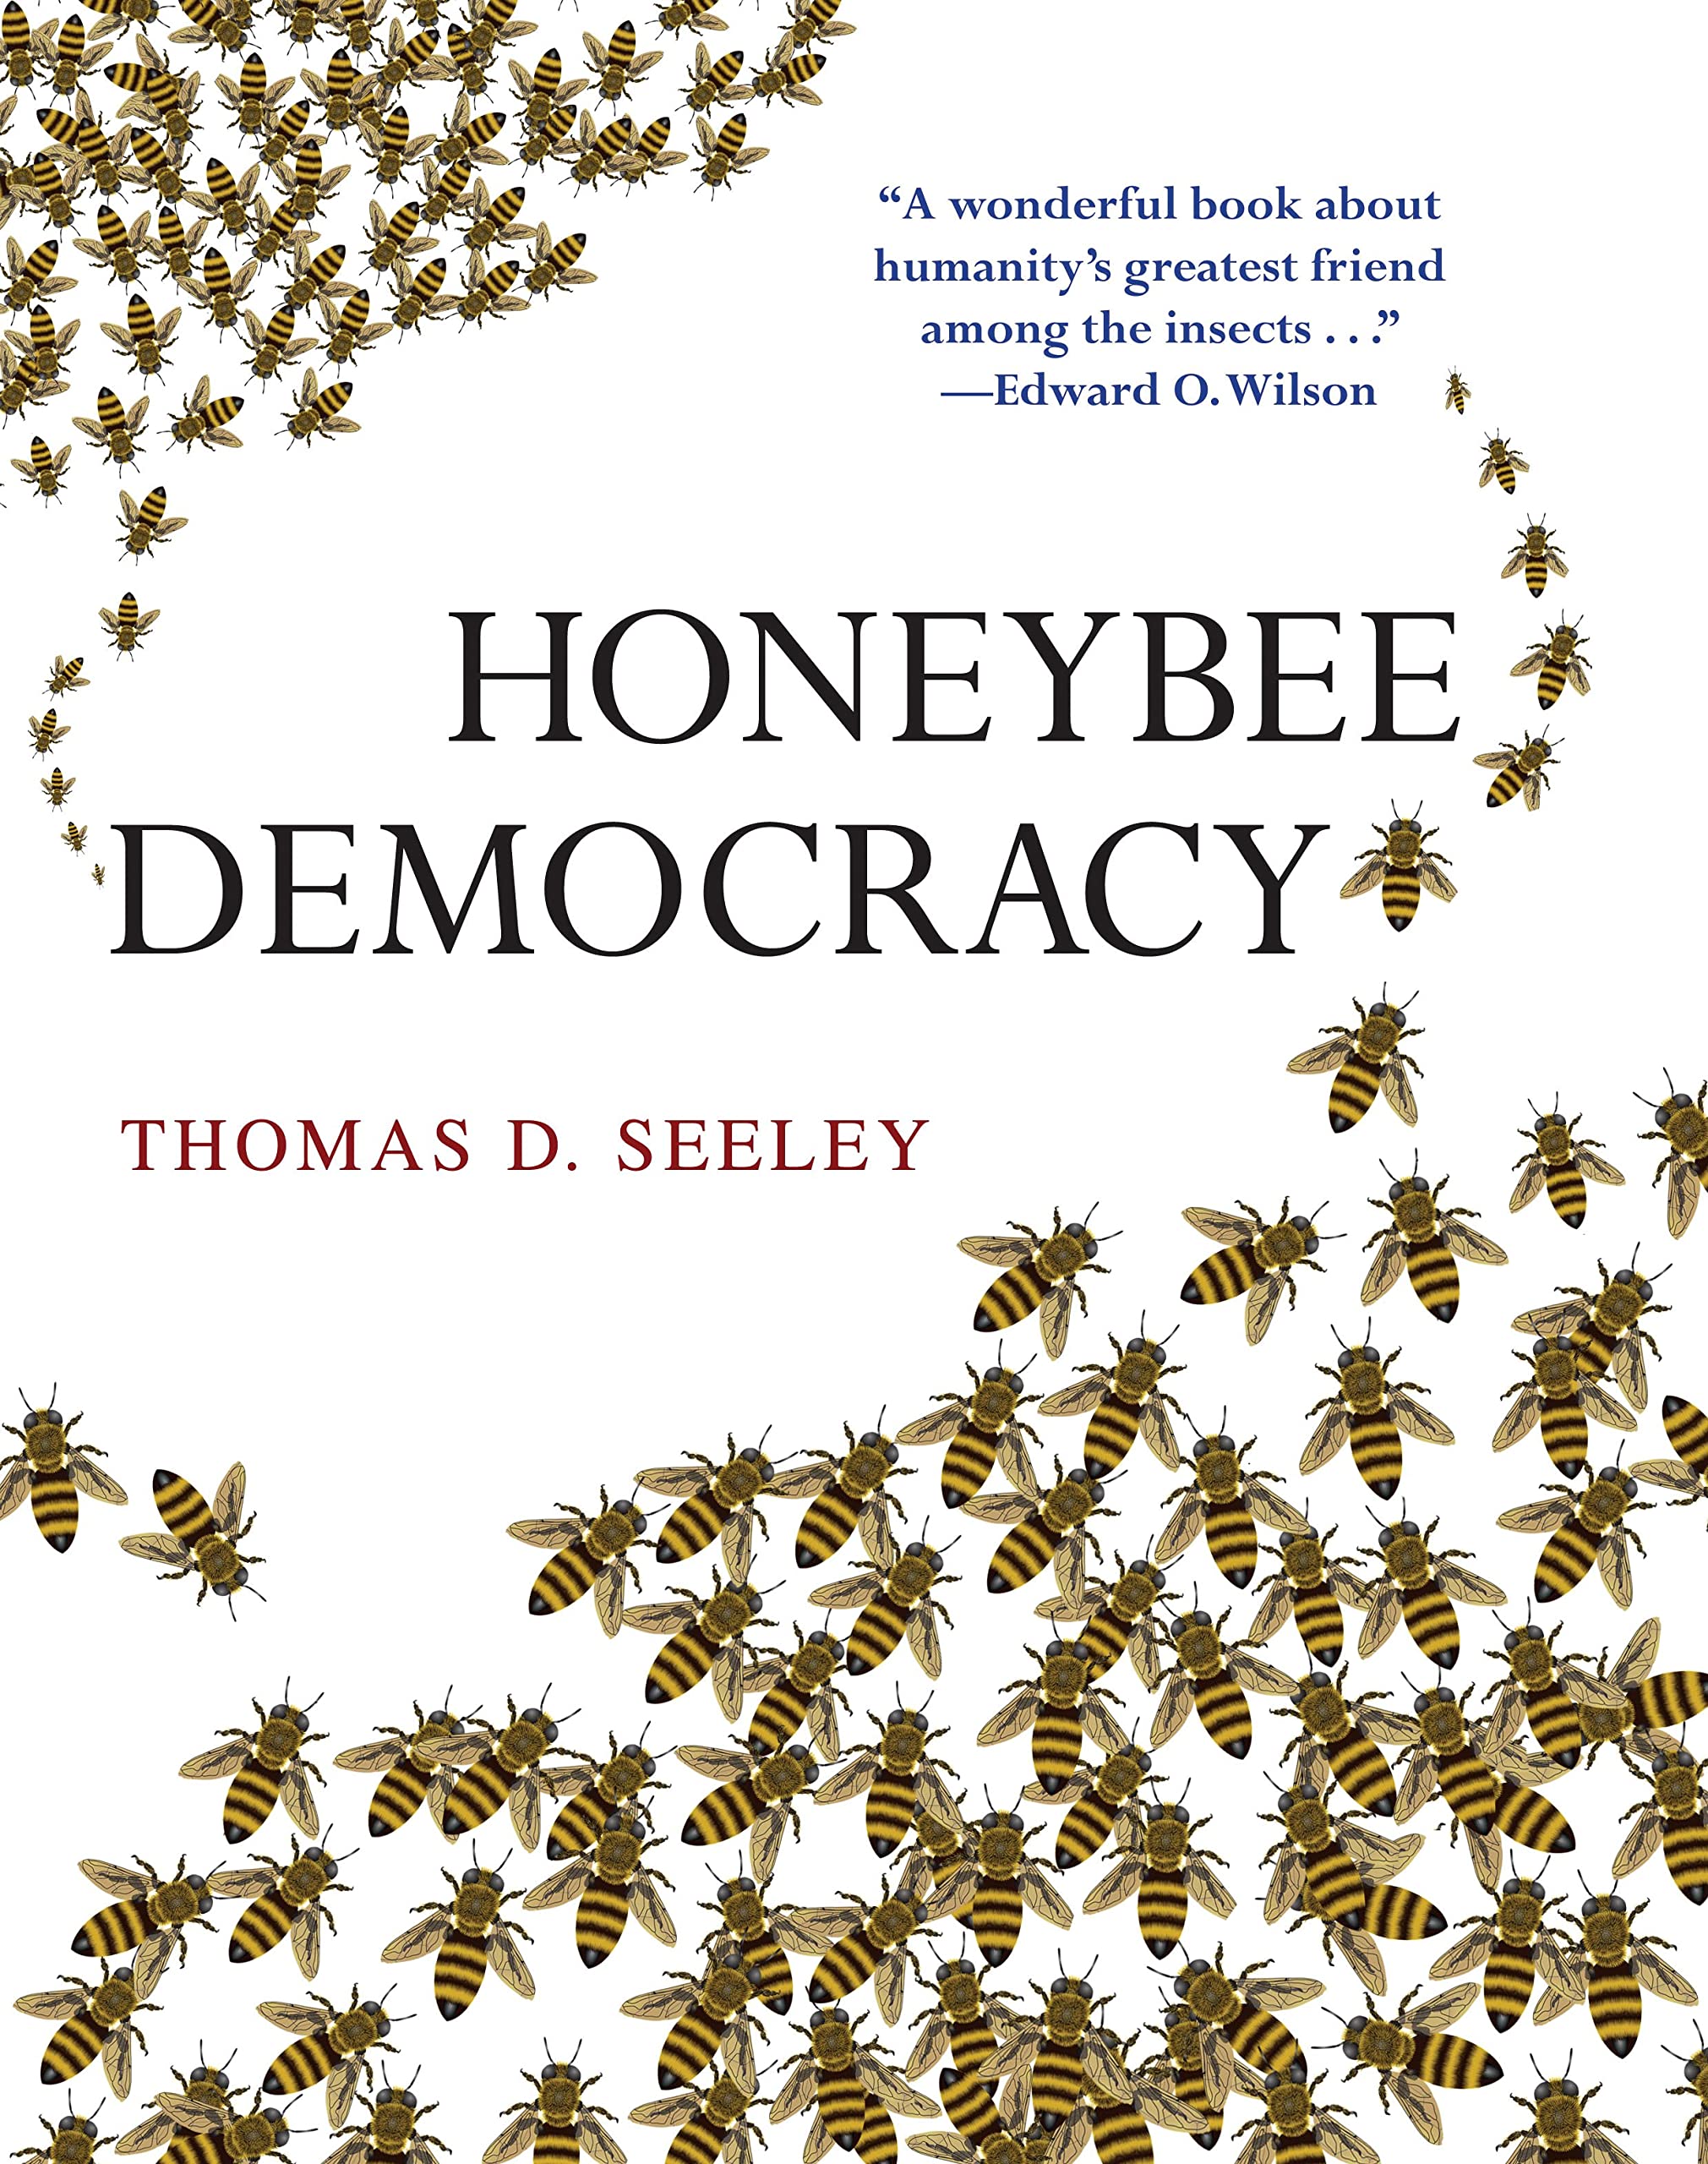 Thomas D. Seeley: Honeybee democracy (2010, Princeton University Press)